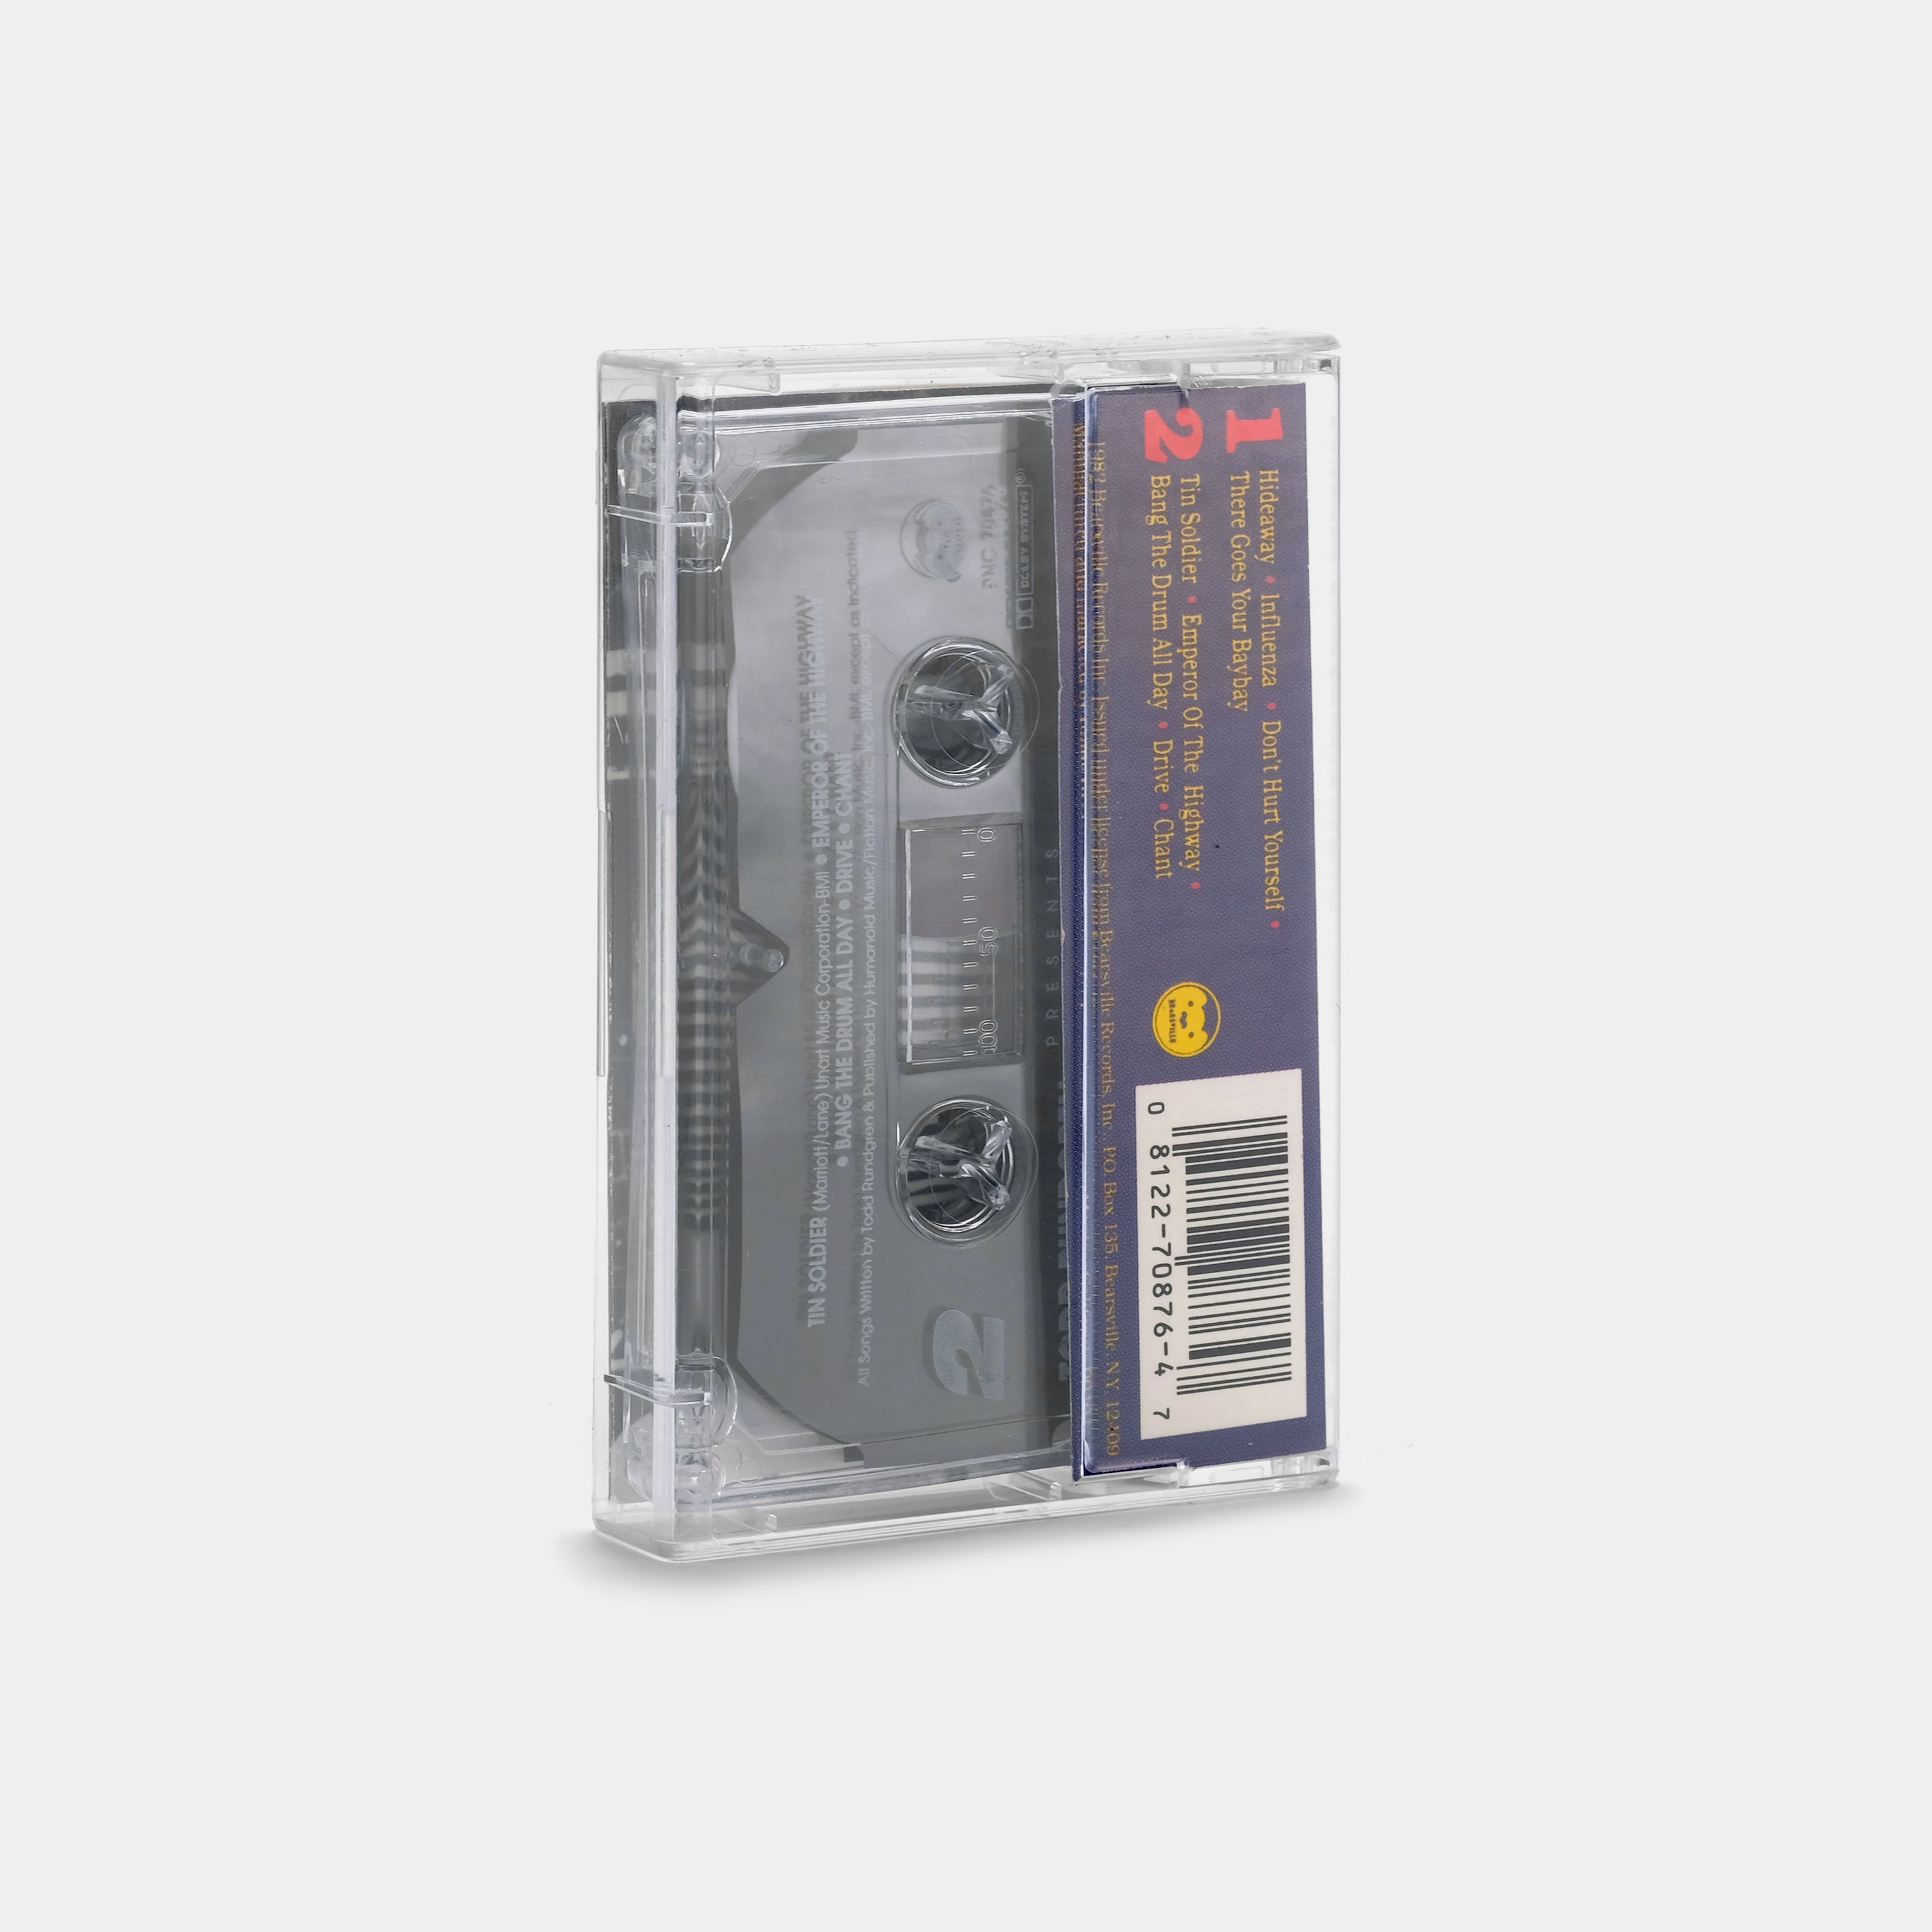 Todd Rundgren - The Ever Popular Tortured Artist Effect Cassette Tape